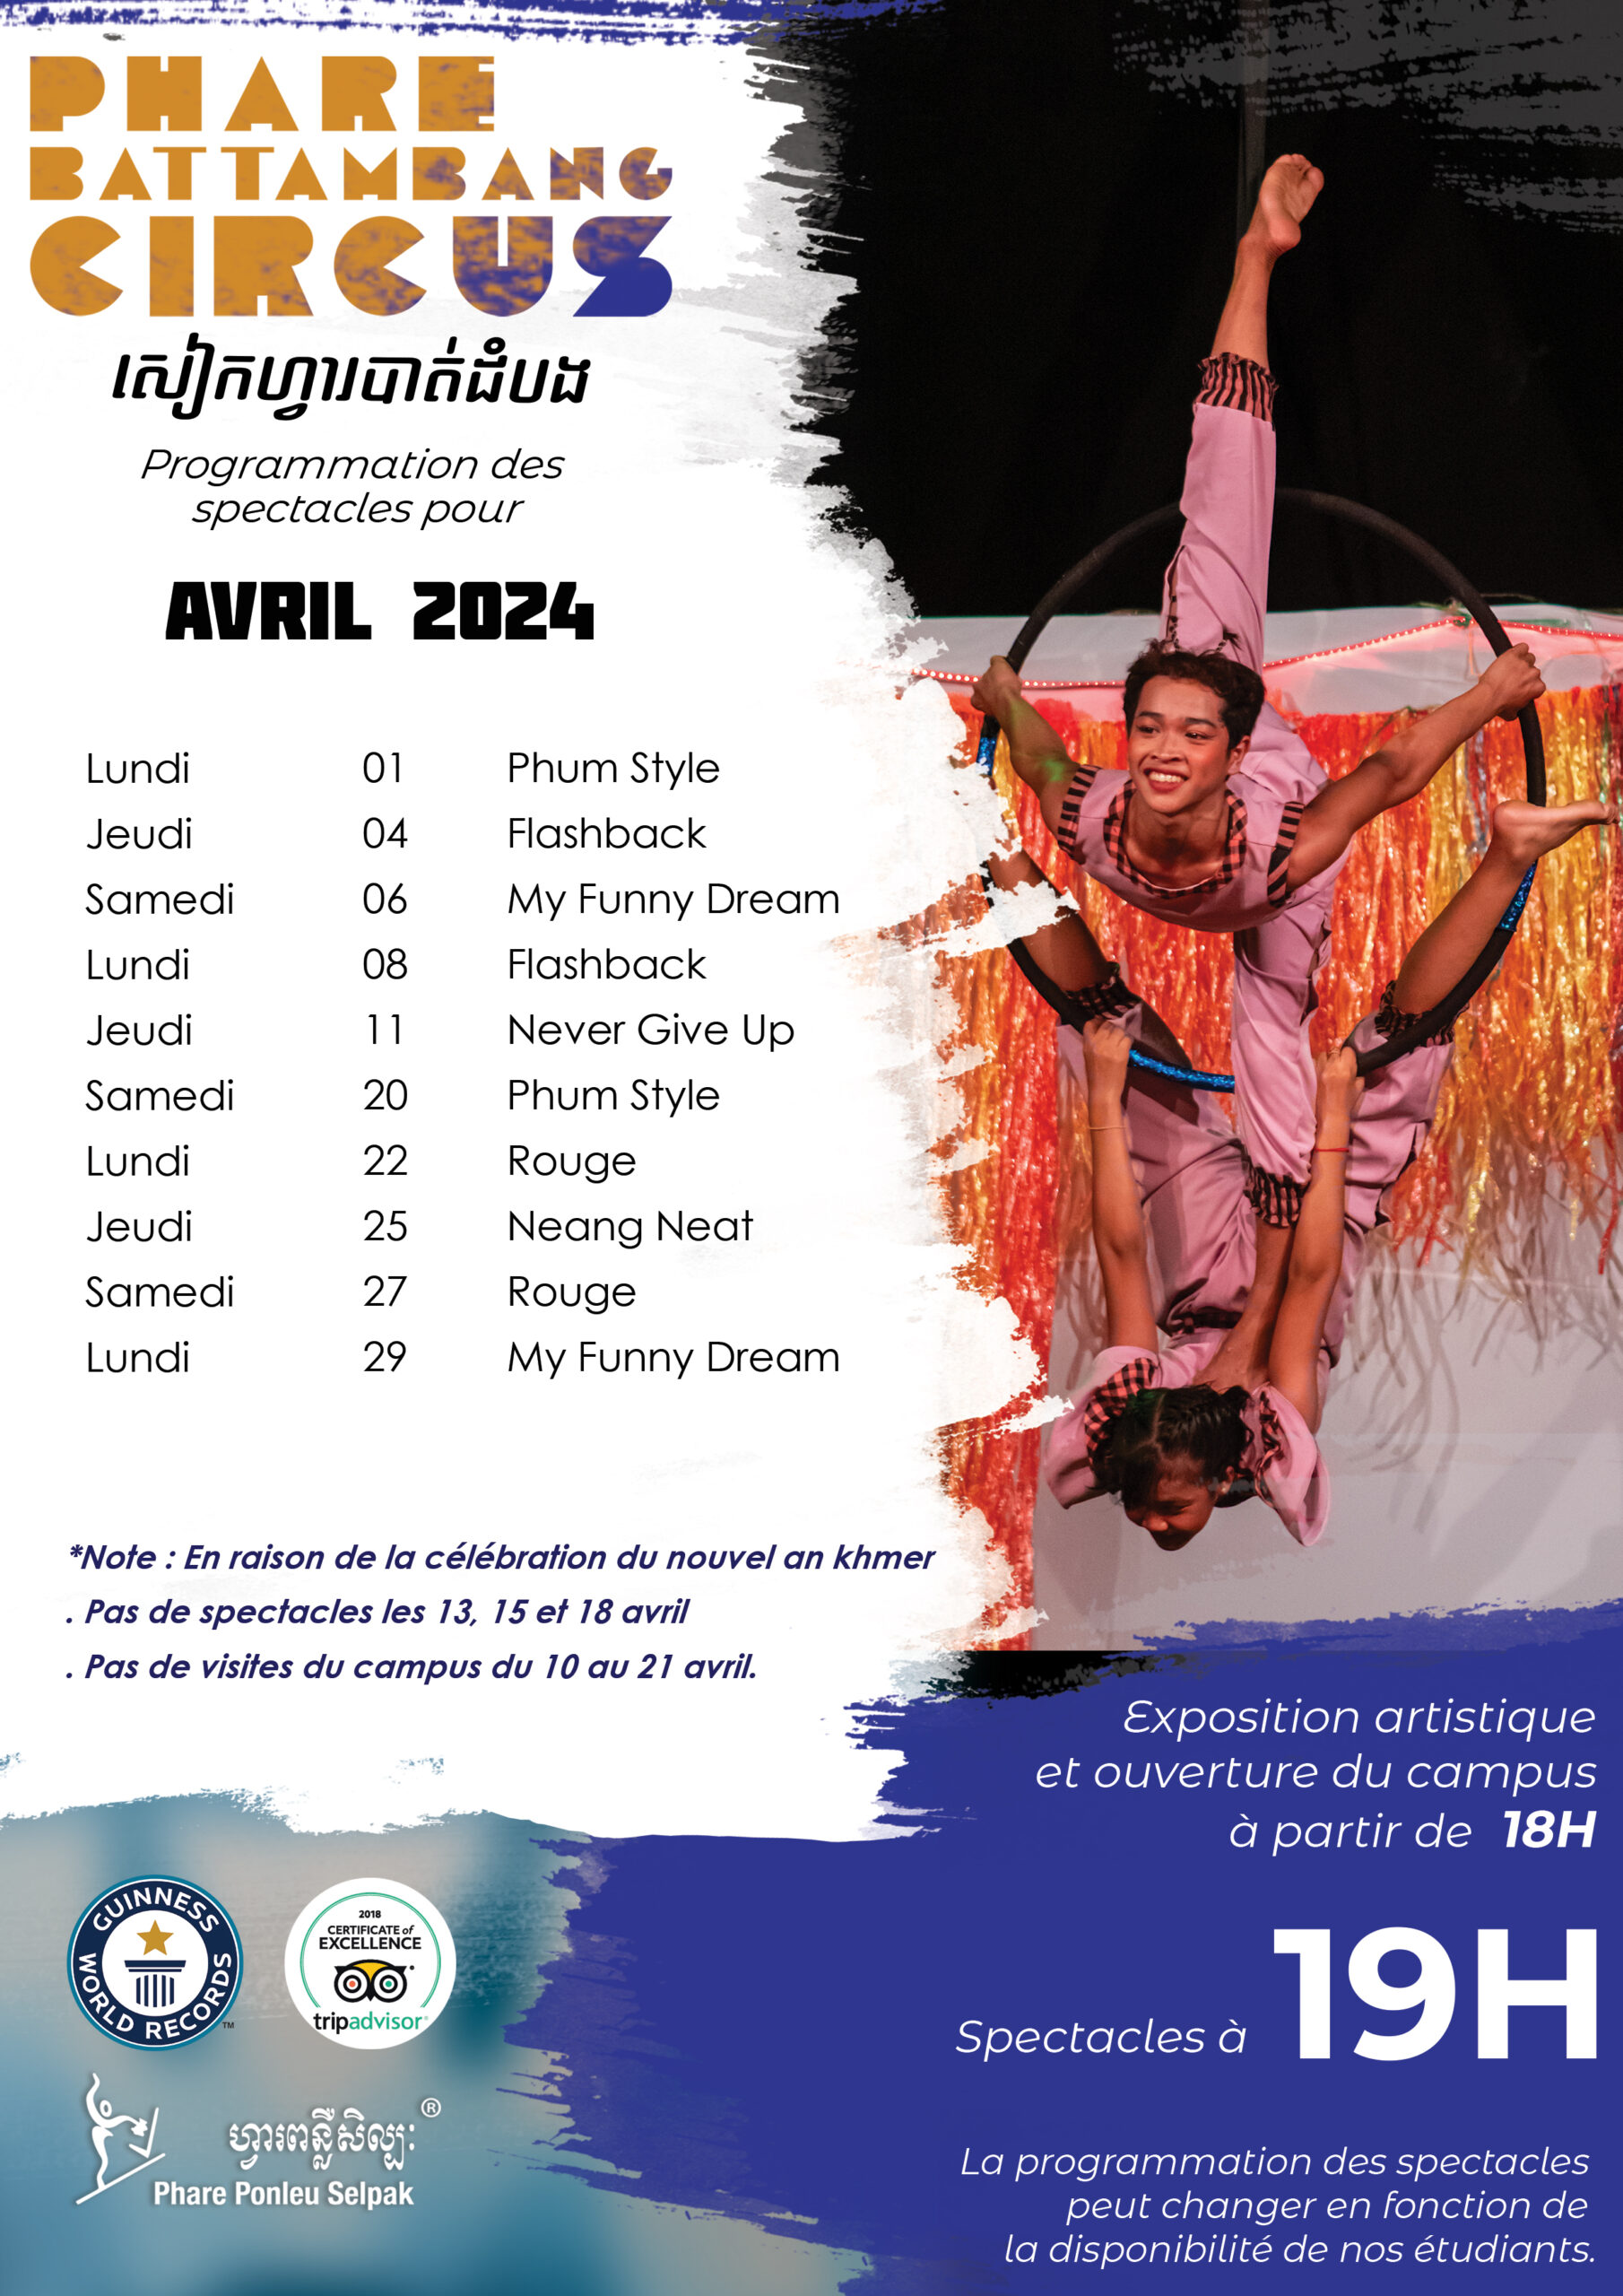 Phare Battambang Circus show schedule in Mars 2024 - français